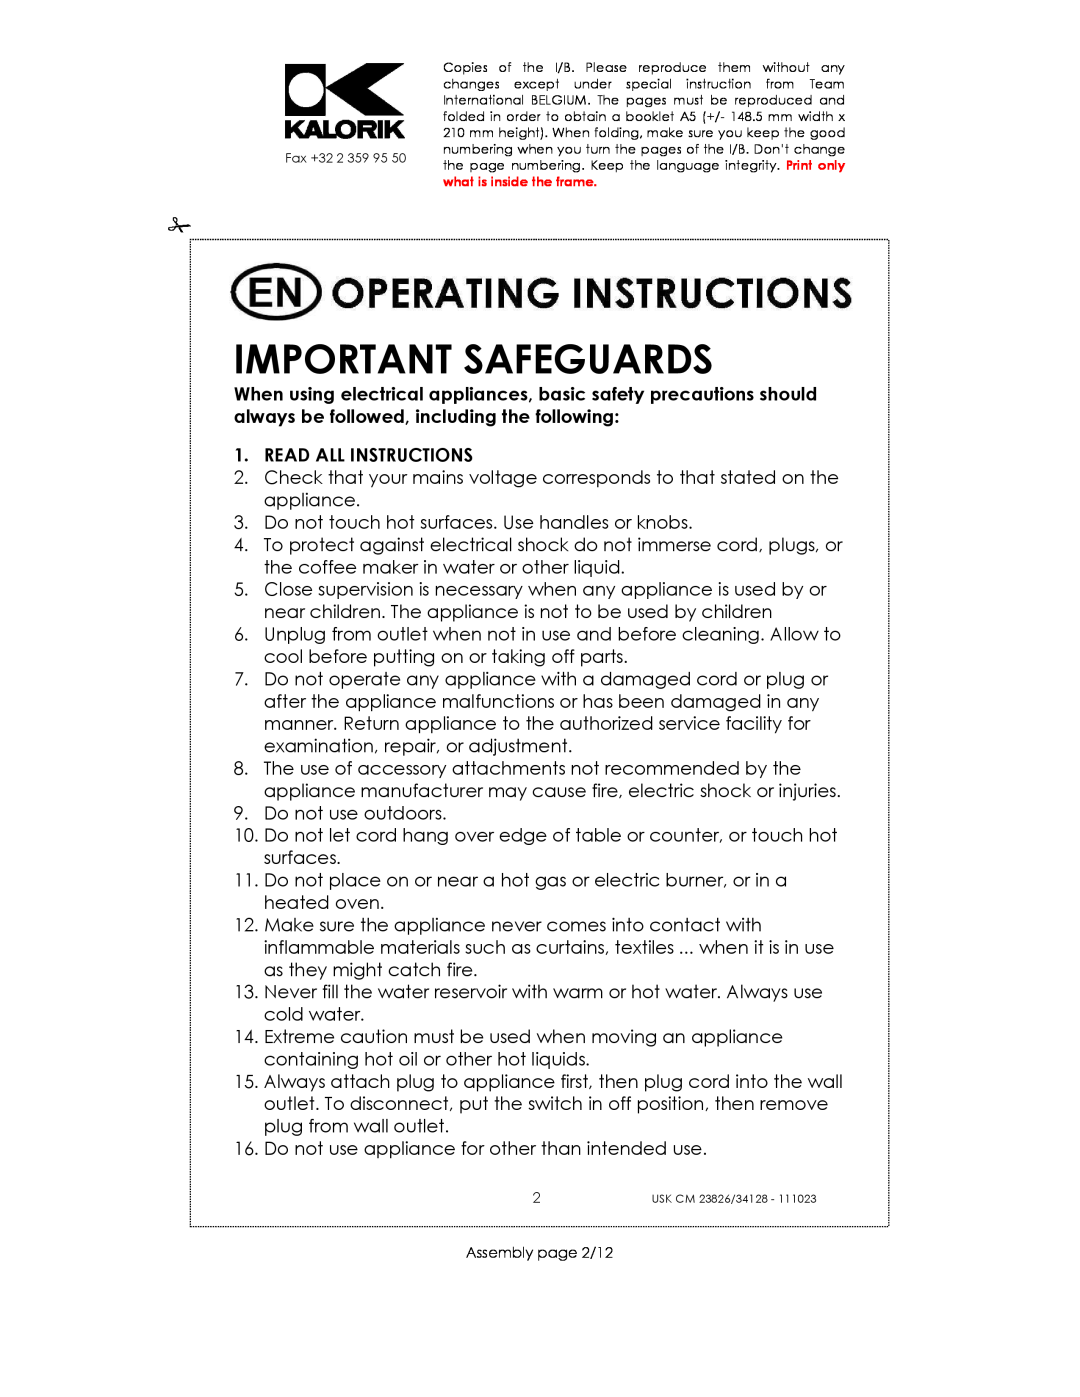 Kalorik USK CM 34128, USK CM 23826 manual Important Safeguards, Read All Instructions 